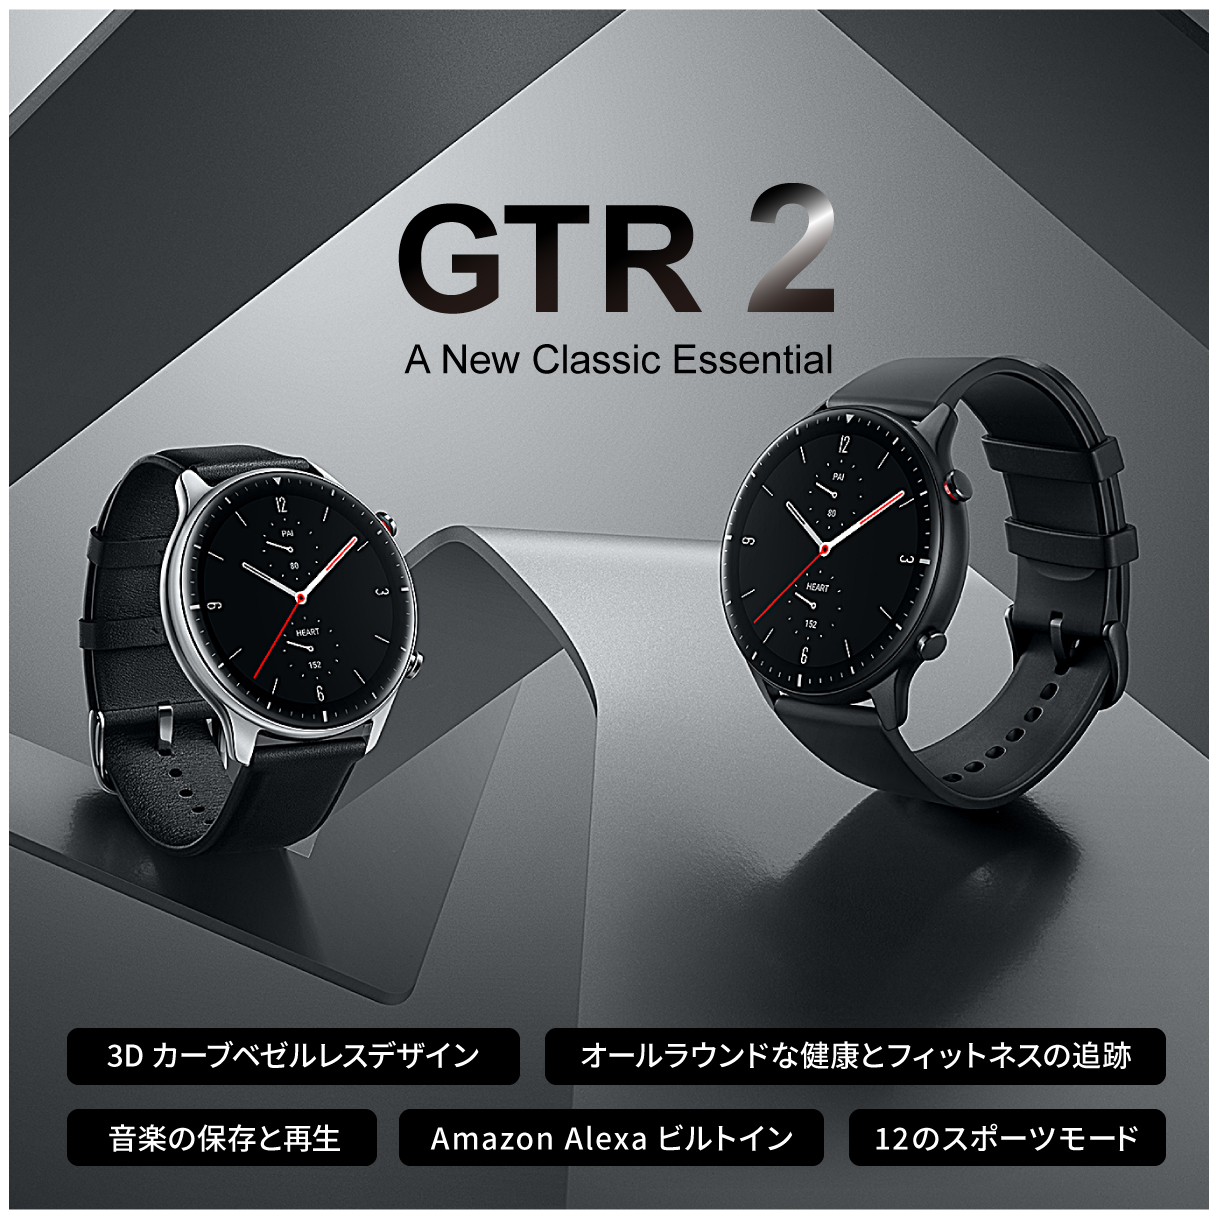 「Amazfit GTR 2」AMAZFITからスマートウォッチの新商品発売のお知らせ